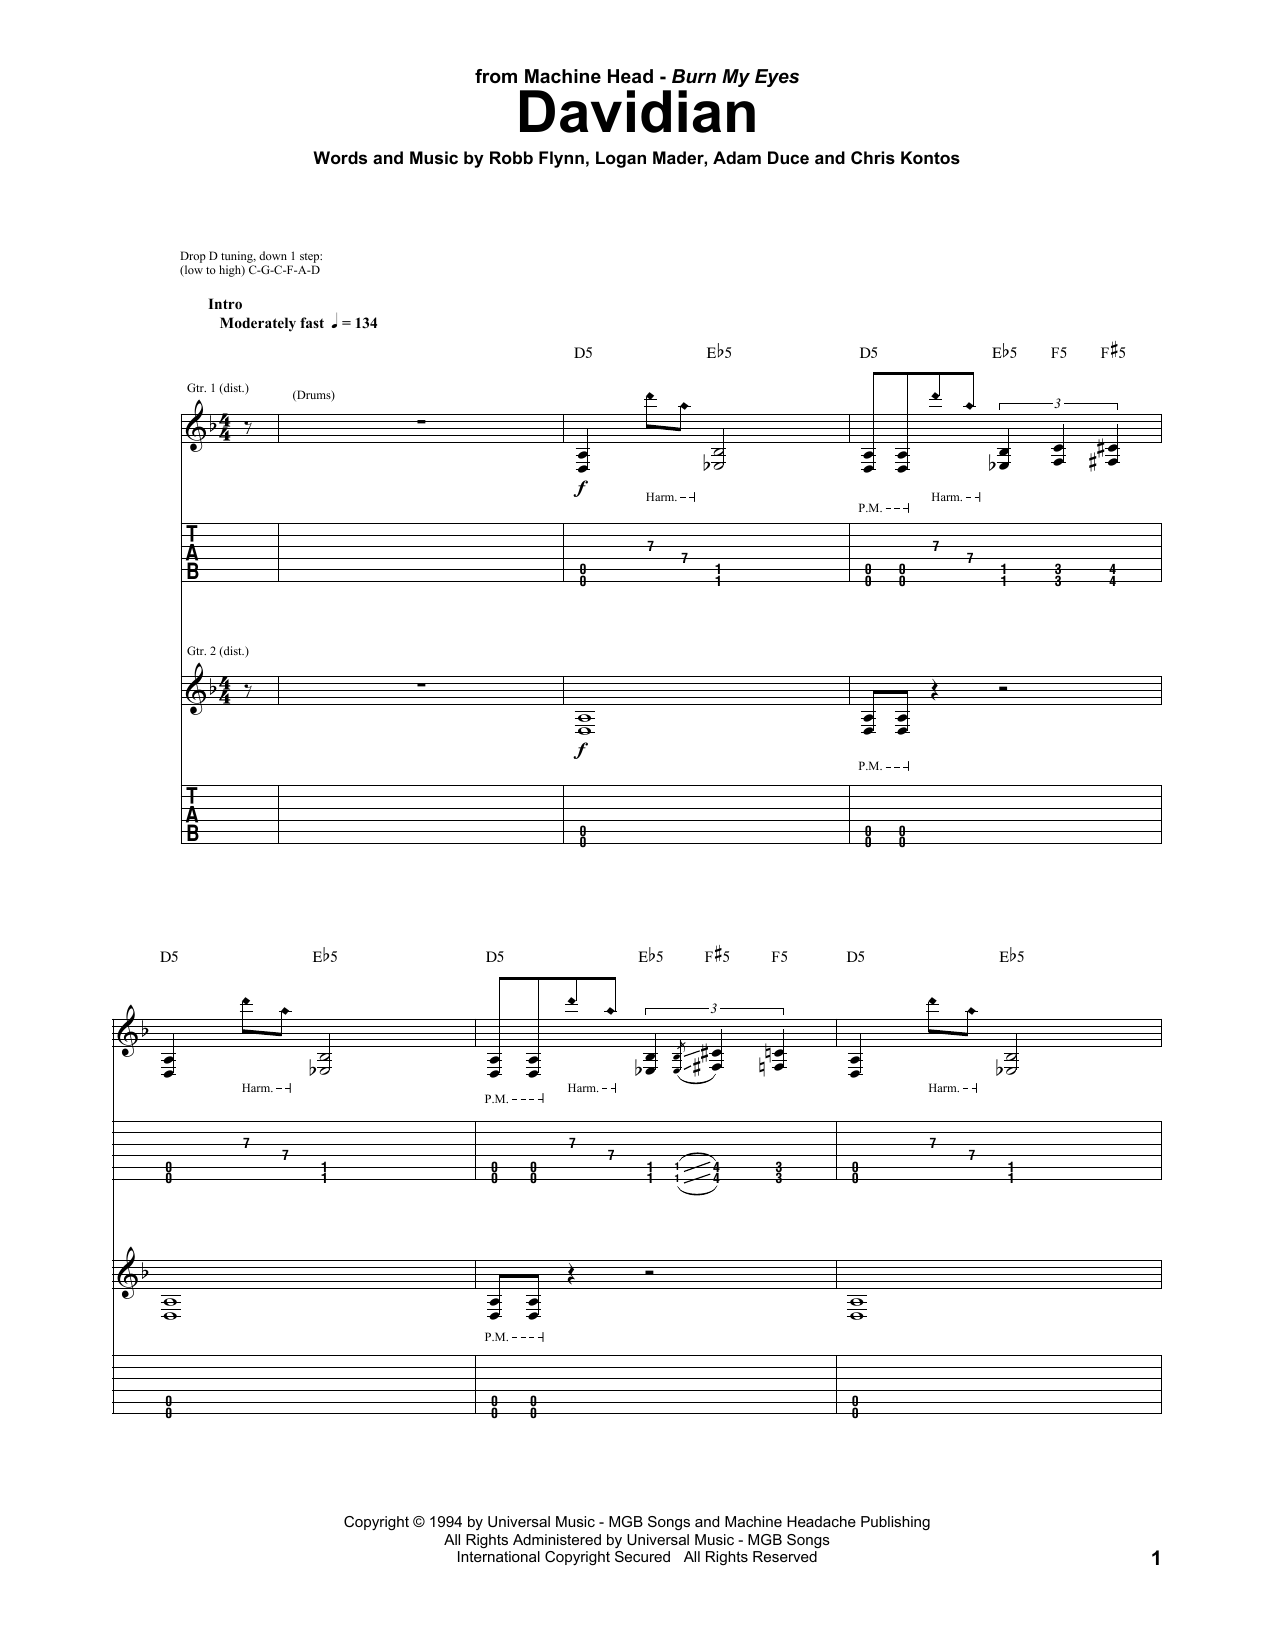 Machine Head Davidian Sheet Music Notes & Chords for Guitar Tab - Download or Print PDF